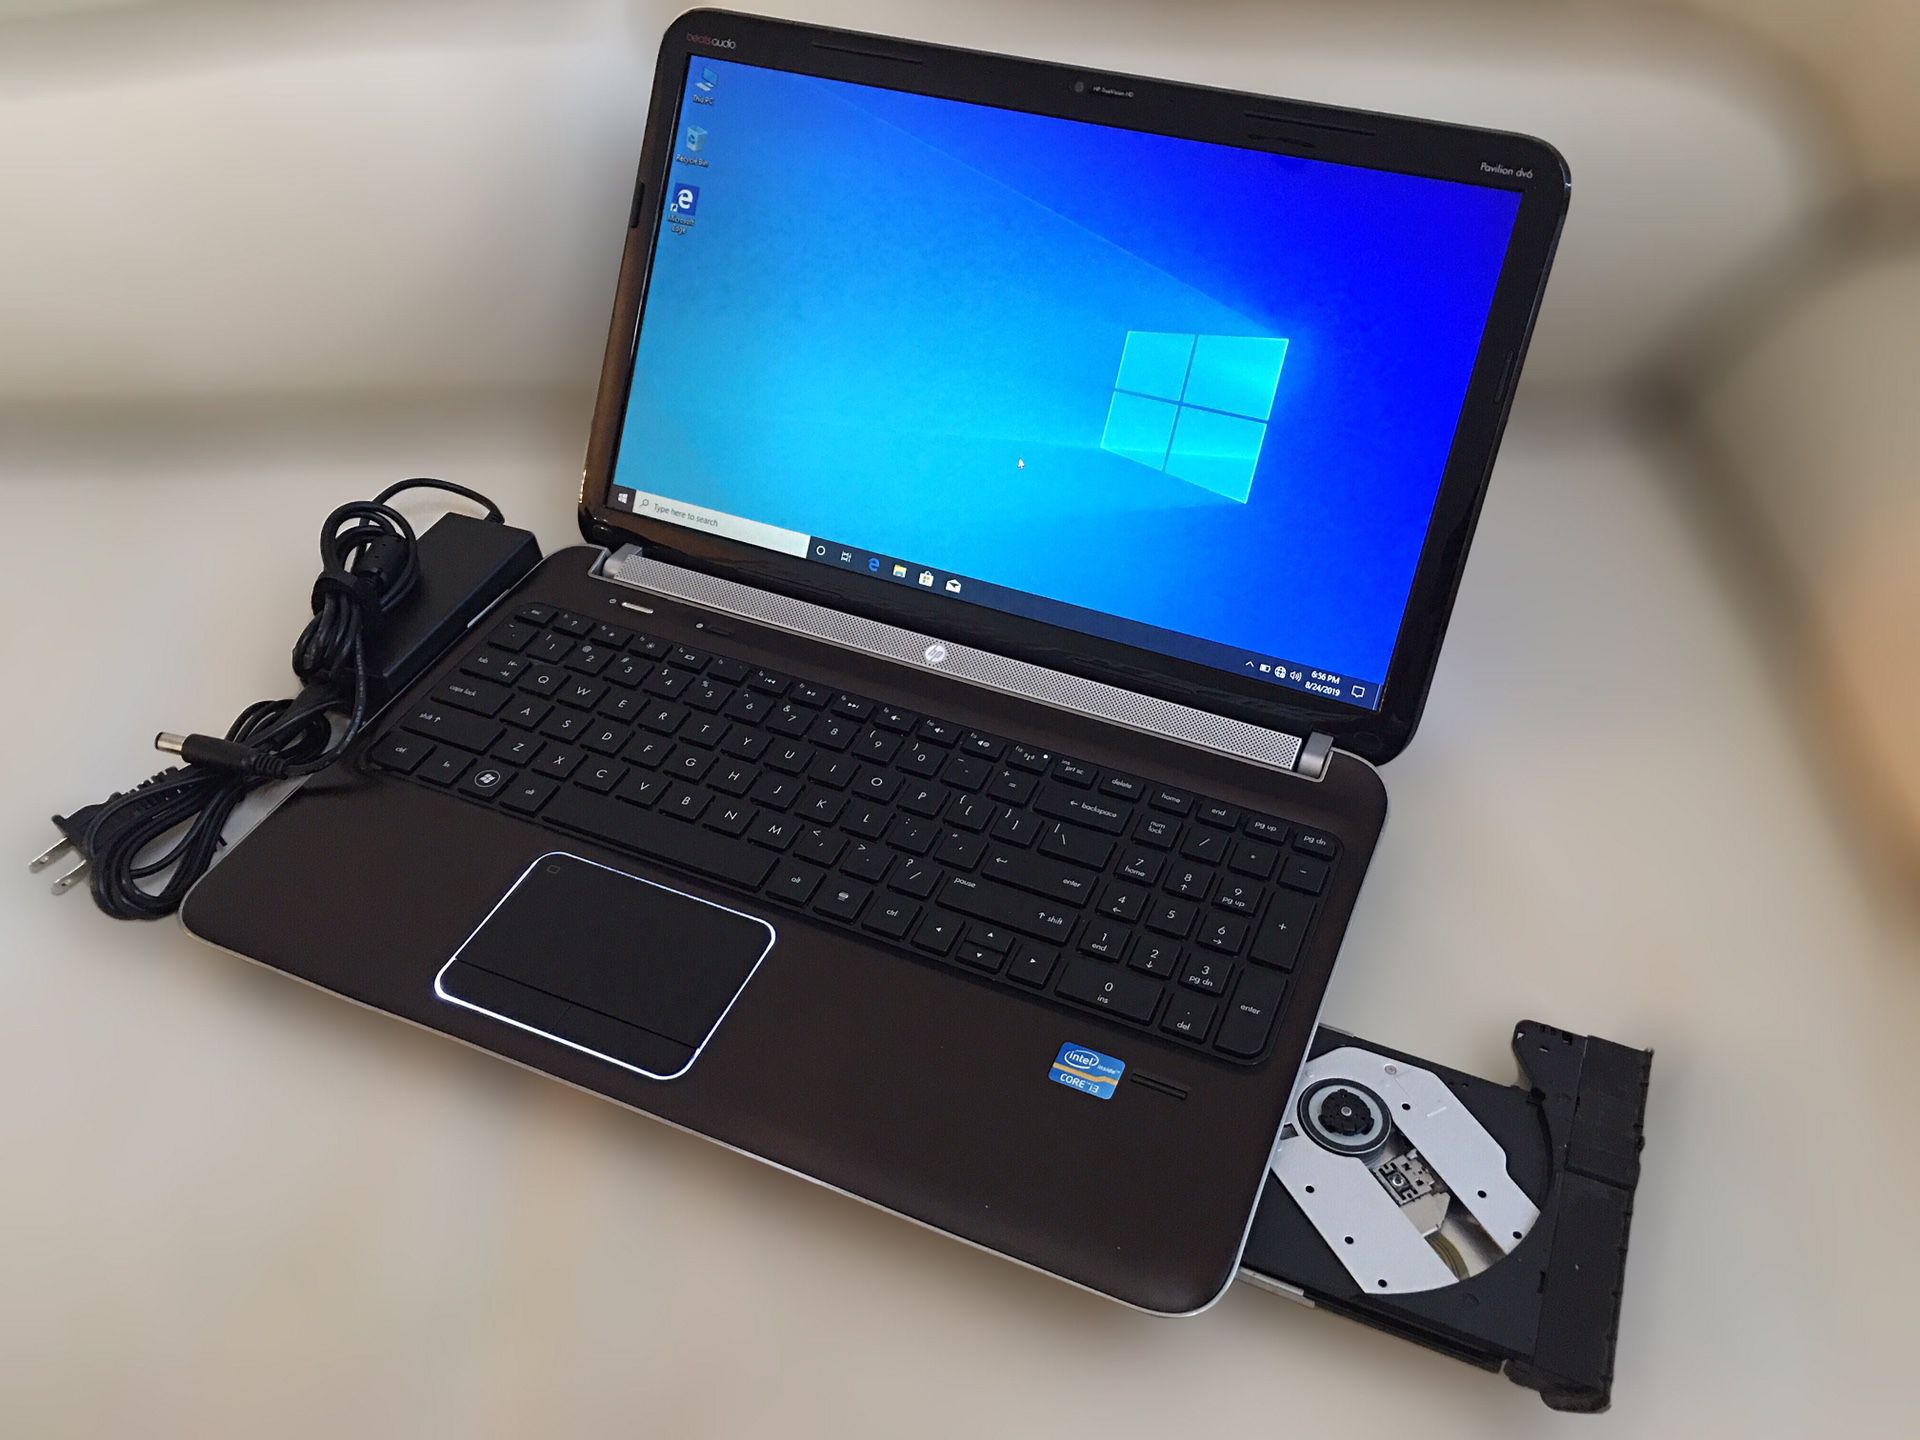 HP laptop / Windows 10 / Antivirus / Charger